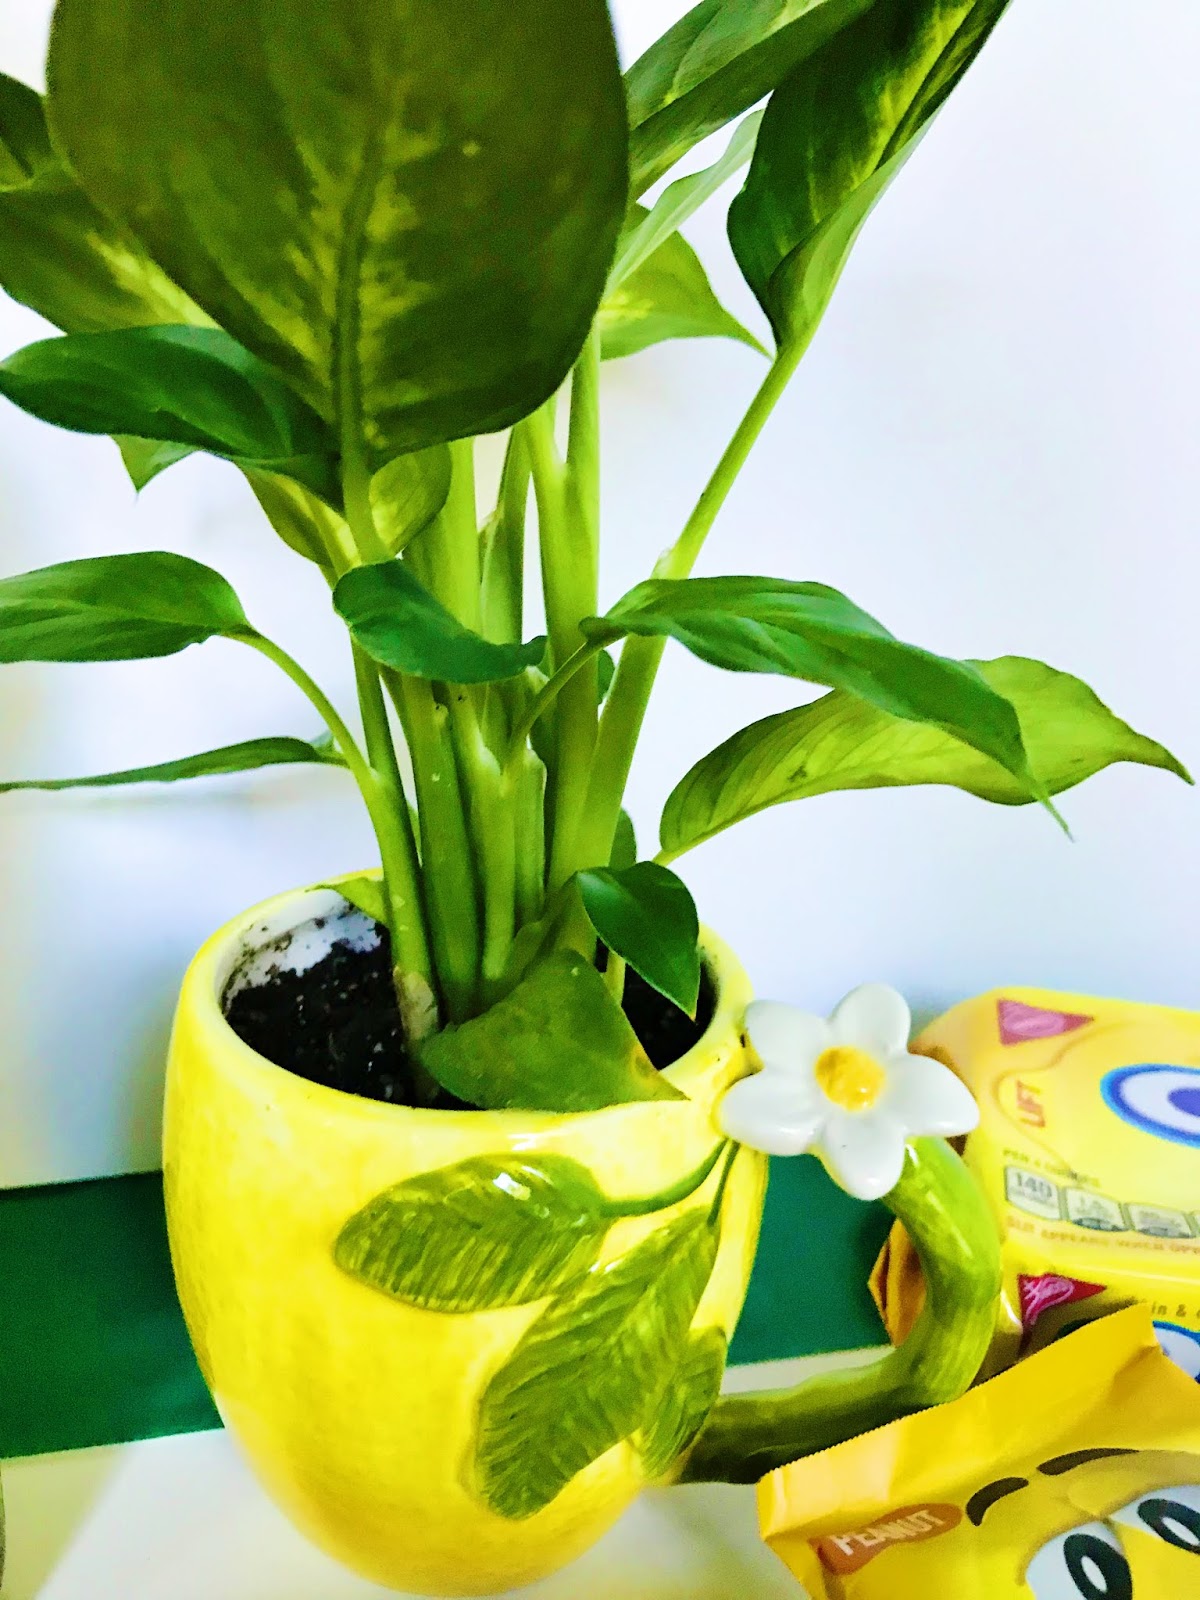 michelle paige blogs: Make a Yellow Lemon Themed Gift Basket